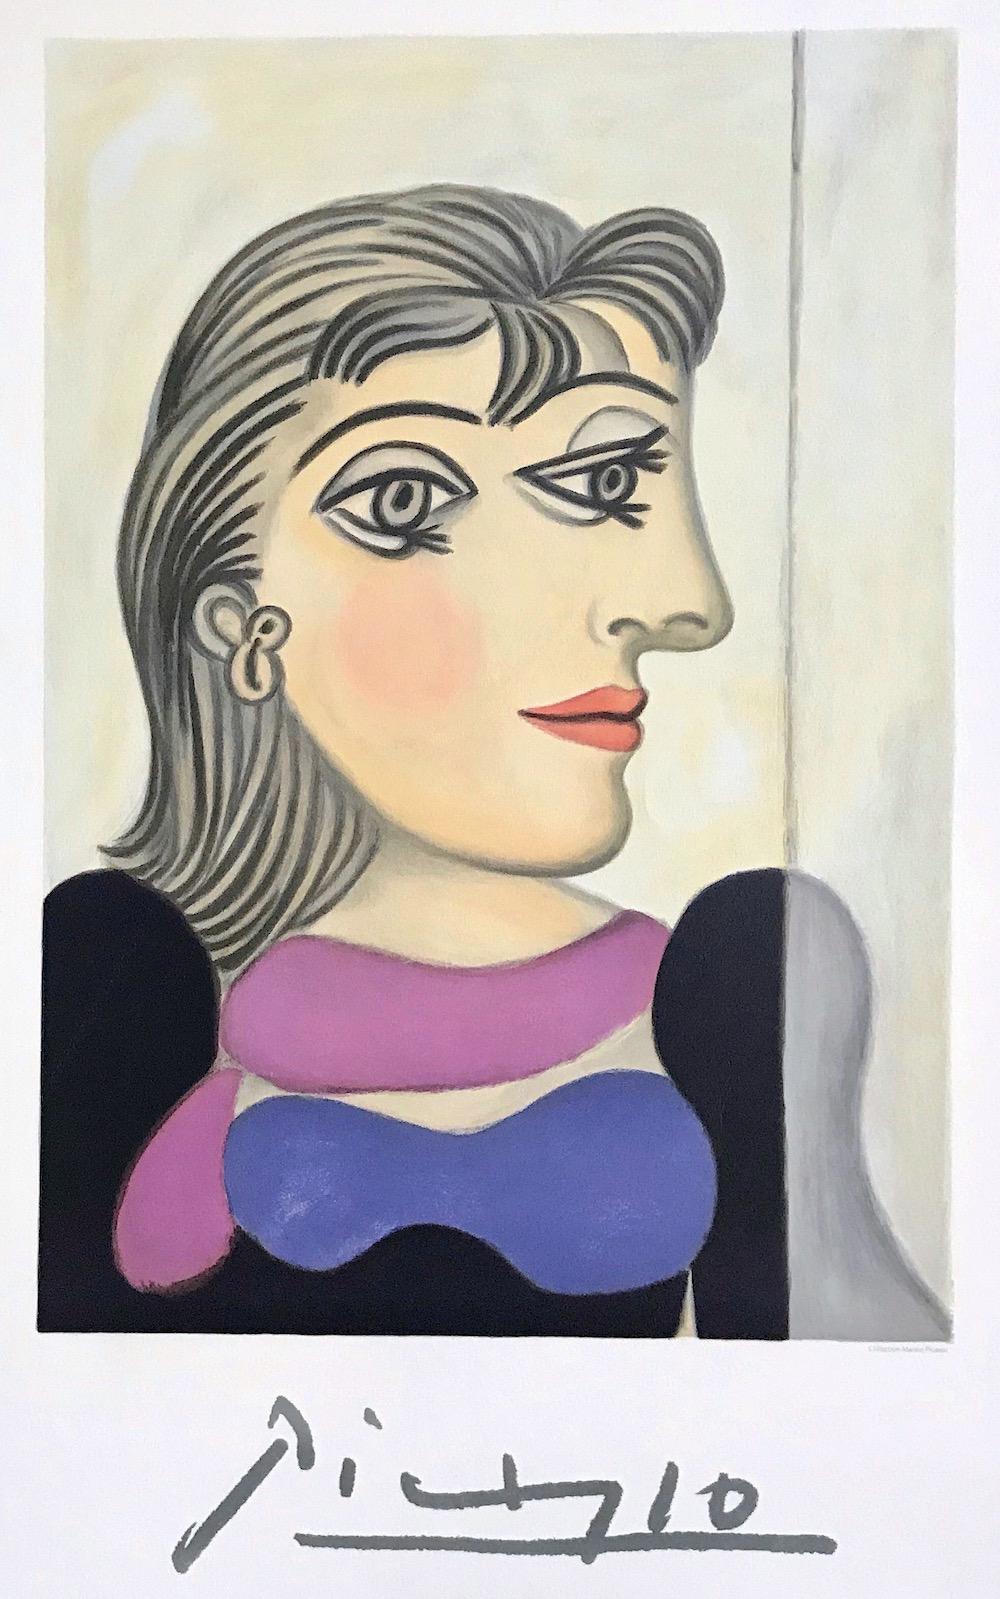 BUSTE DE FEMME AU FOULARD MAUVE Lithographie, Abstraktes weibliches Porträt, Dora Maar – Print von (after) Pablo Picasso